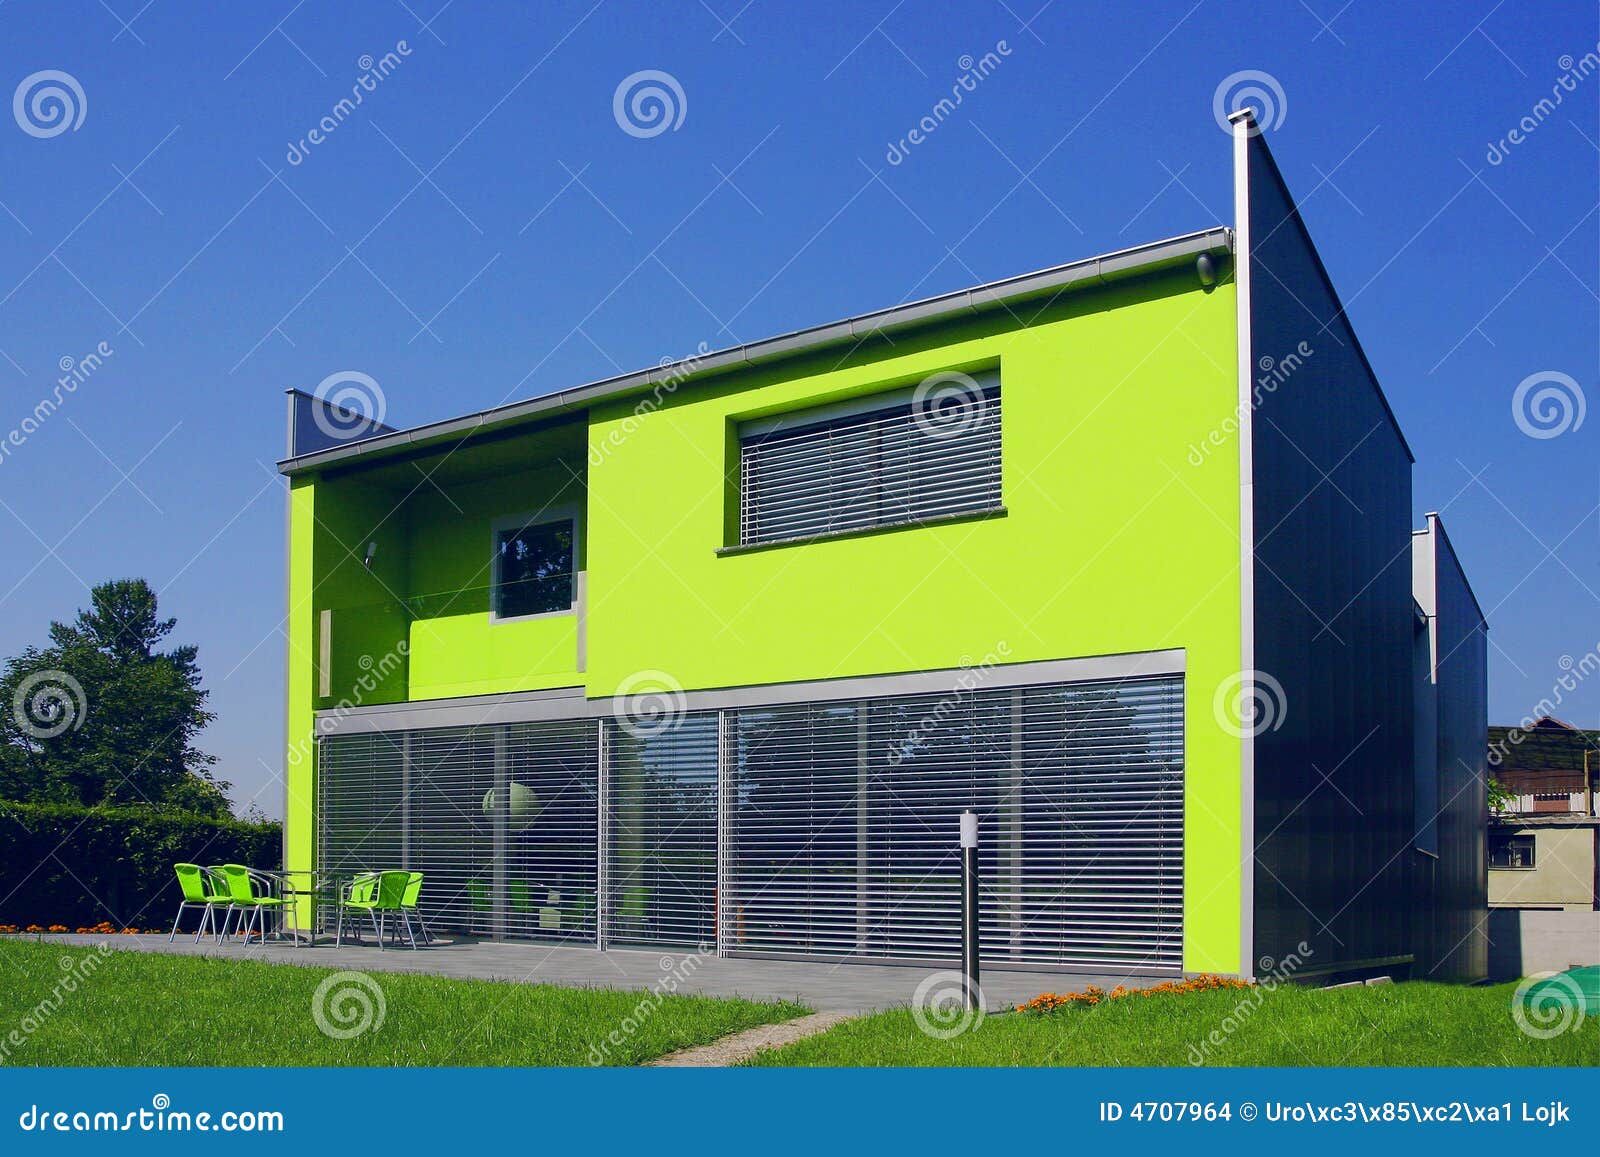 modern green color building